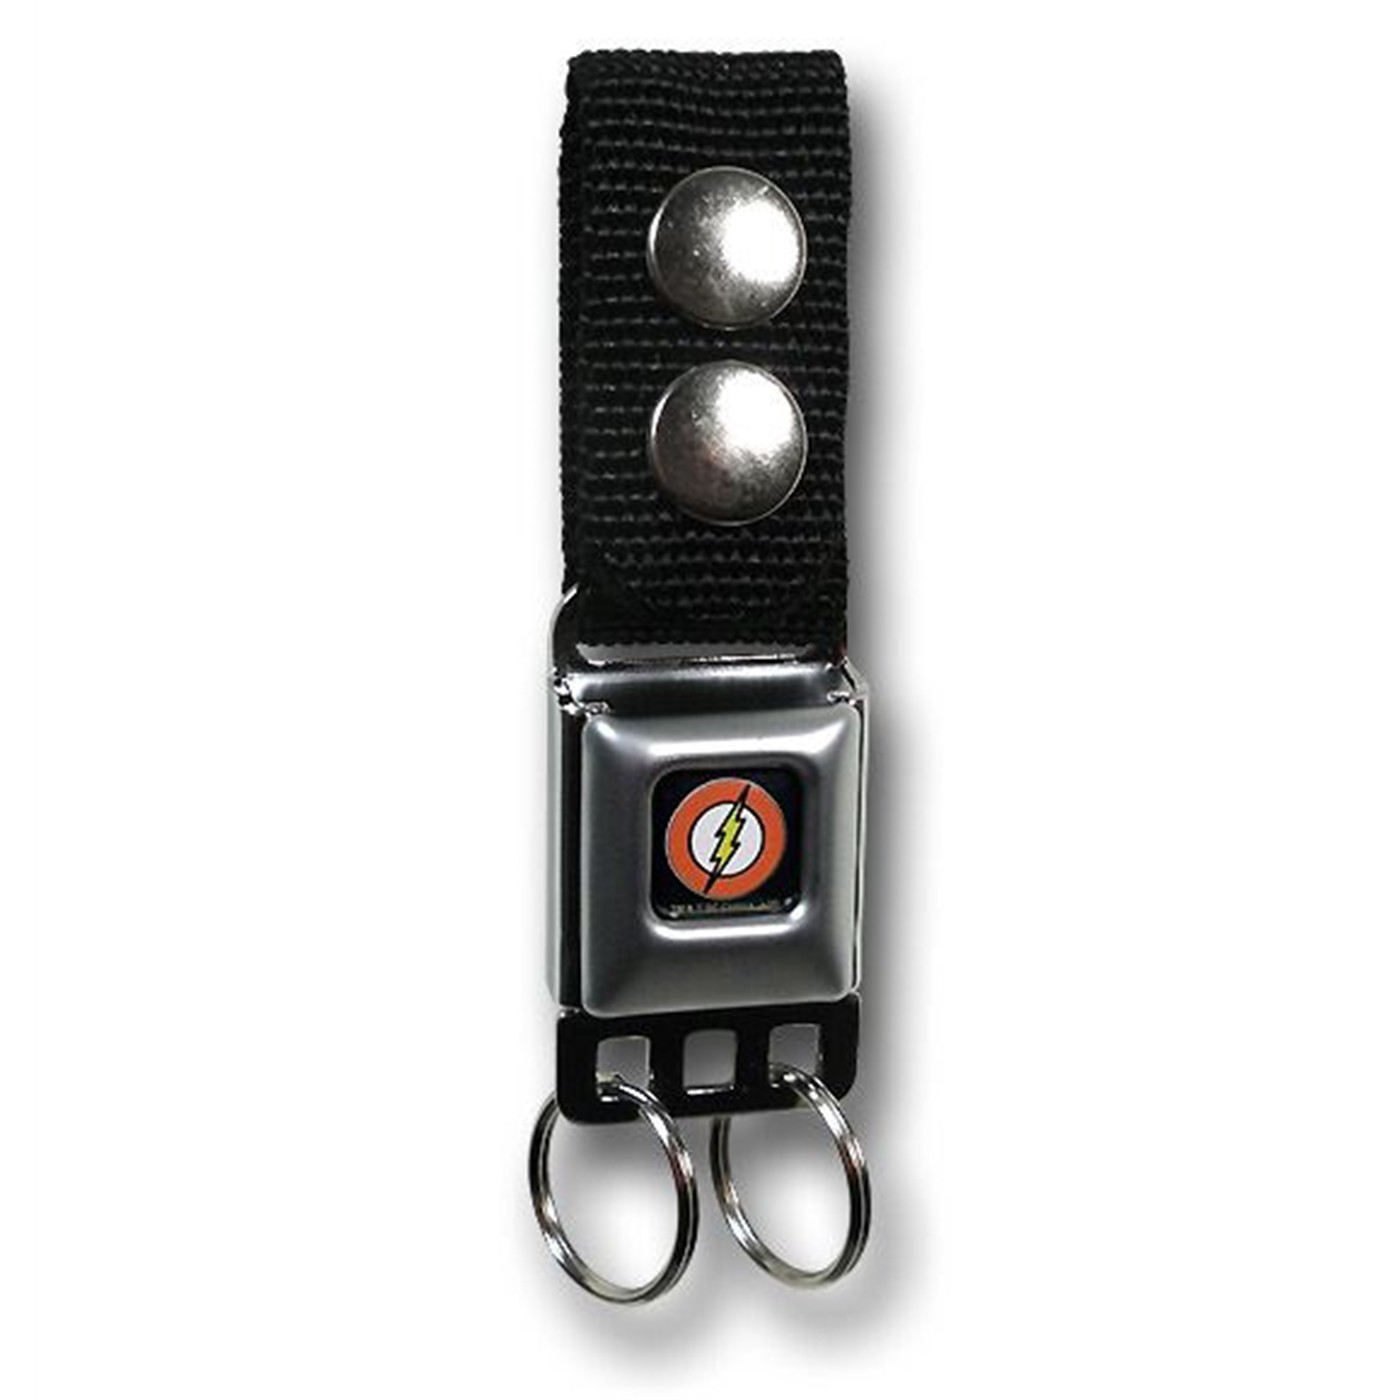 The Flash Seatbelt Keychain w/Snap-On Belt Loop